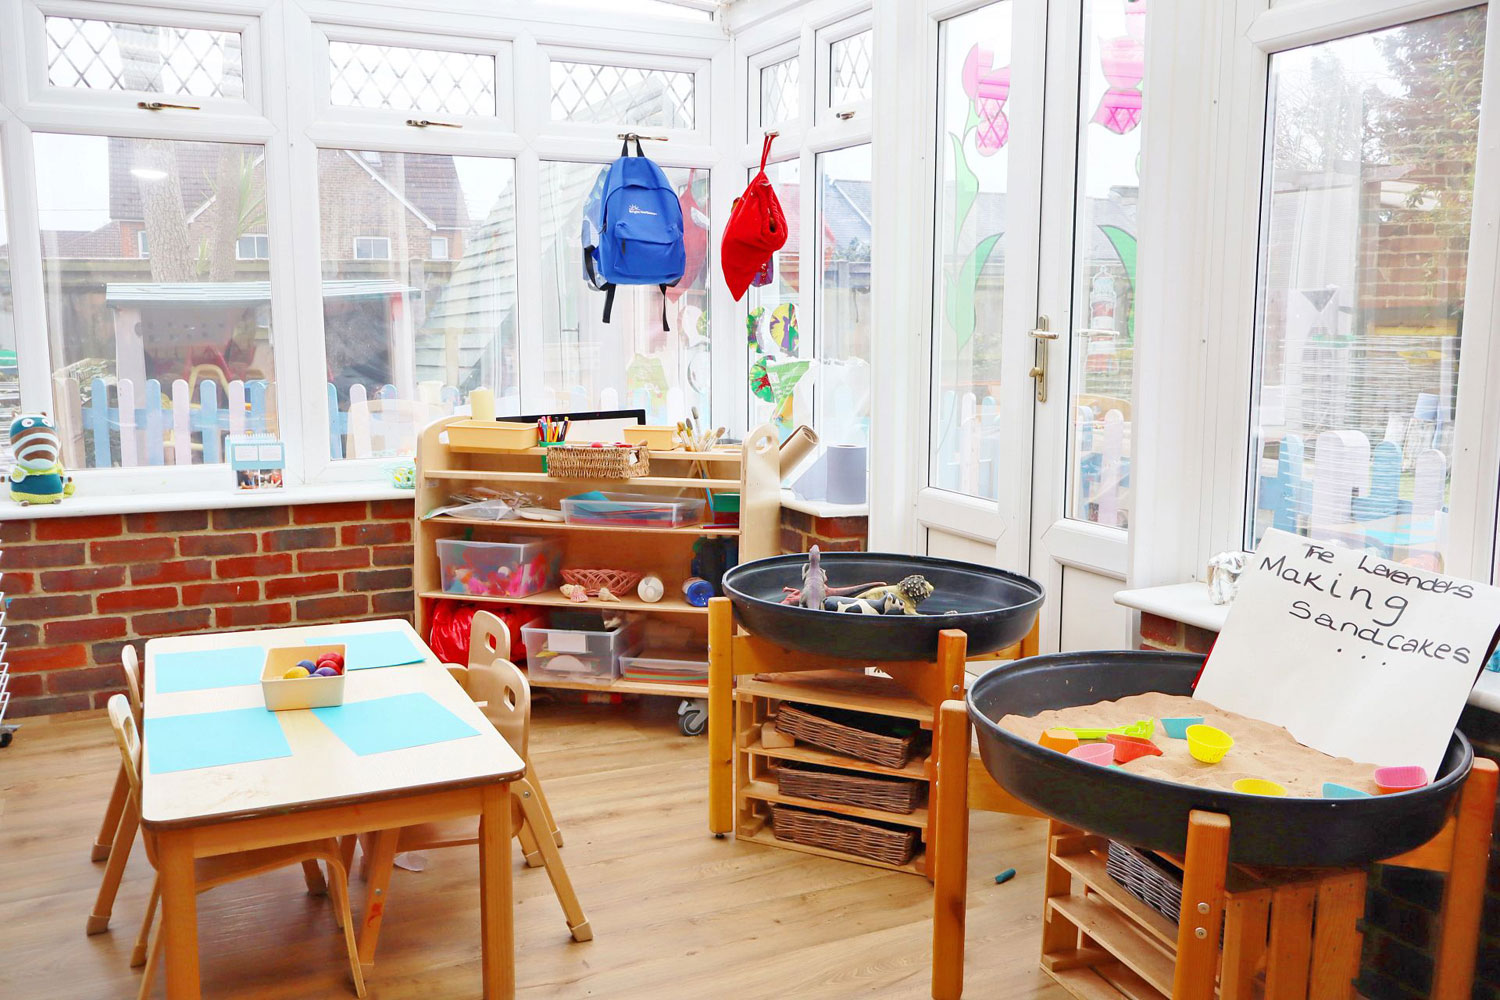 Tudor House Day Nursery and Preschool toddlers room